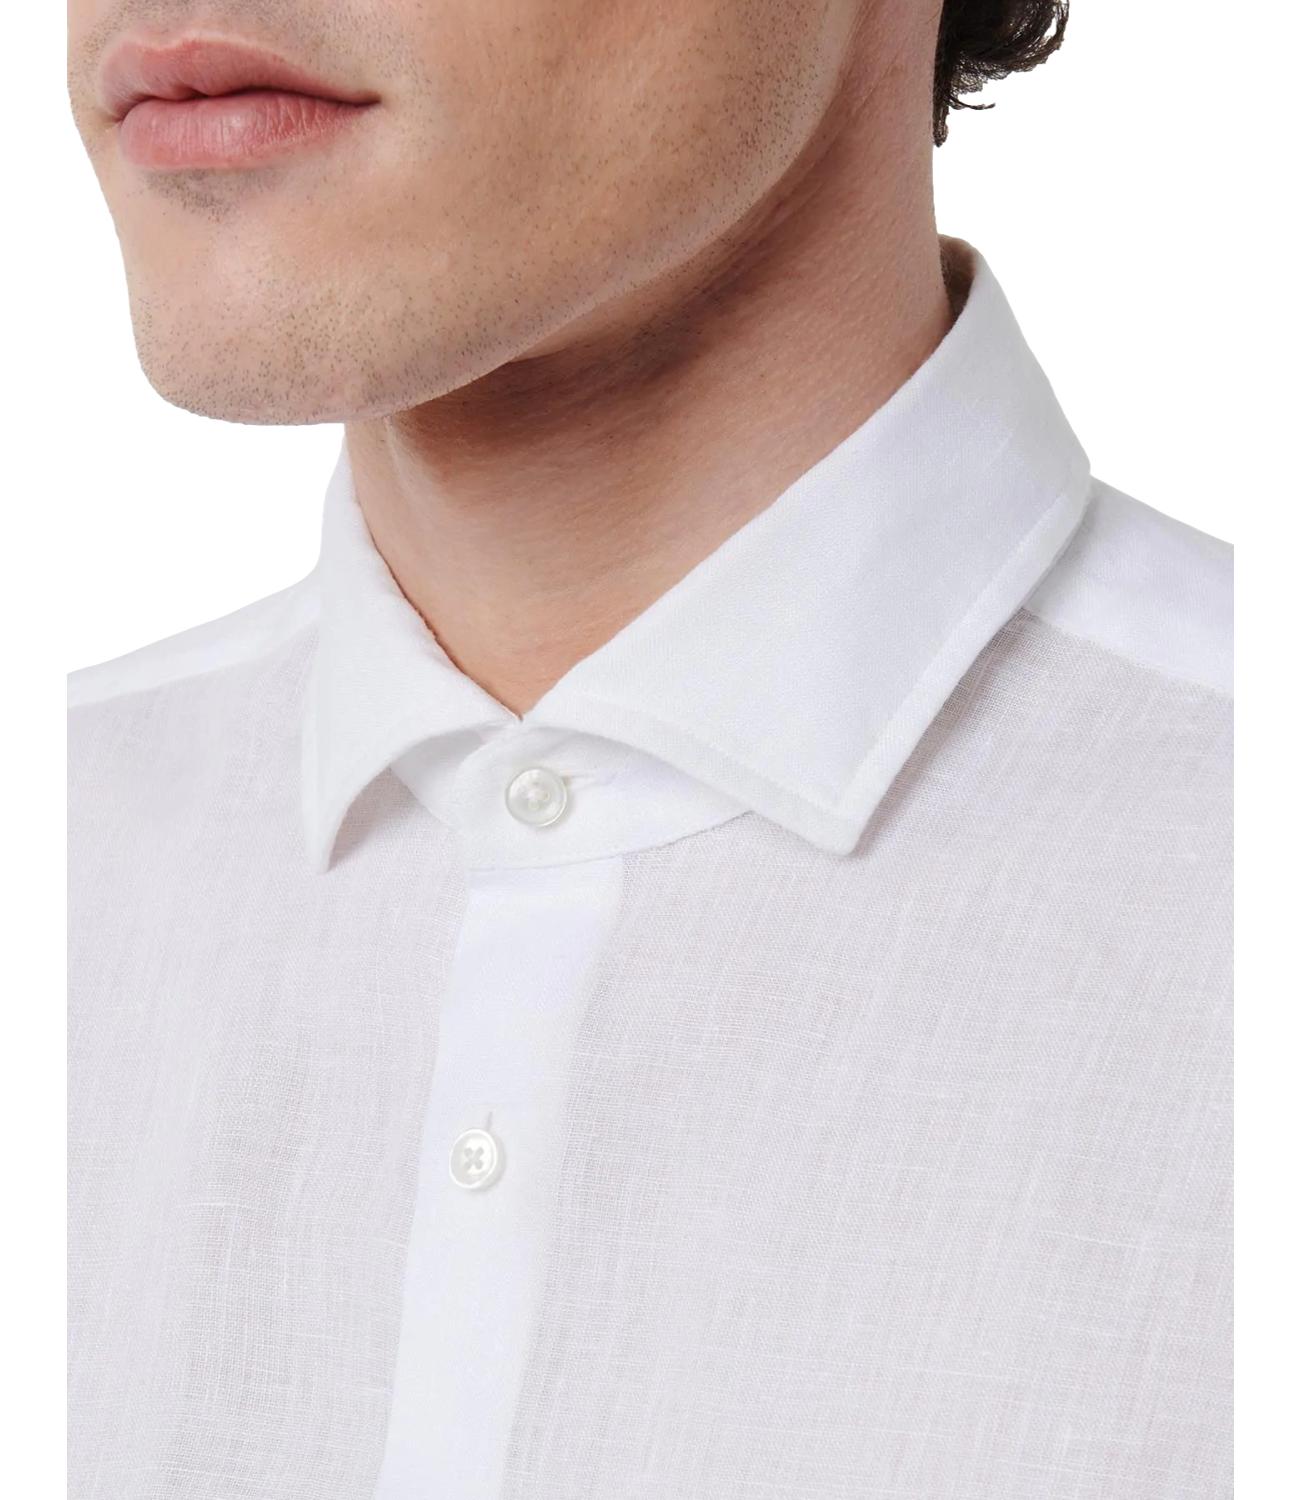 Xacus camicia in lino bianca